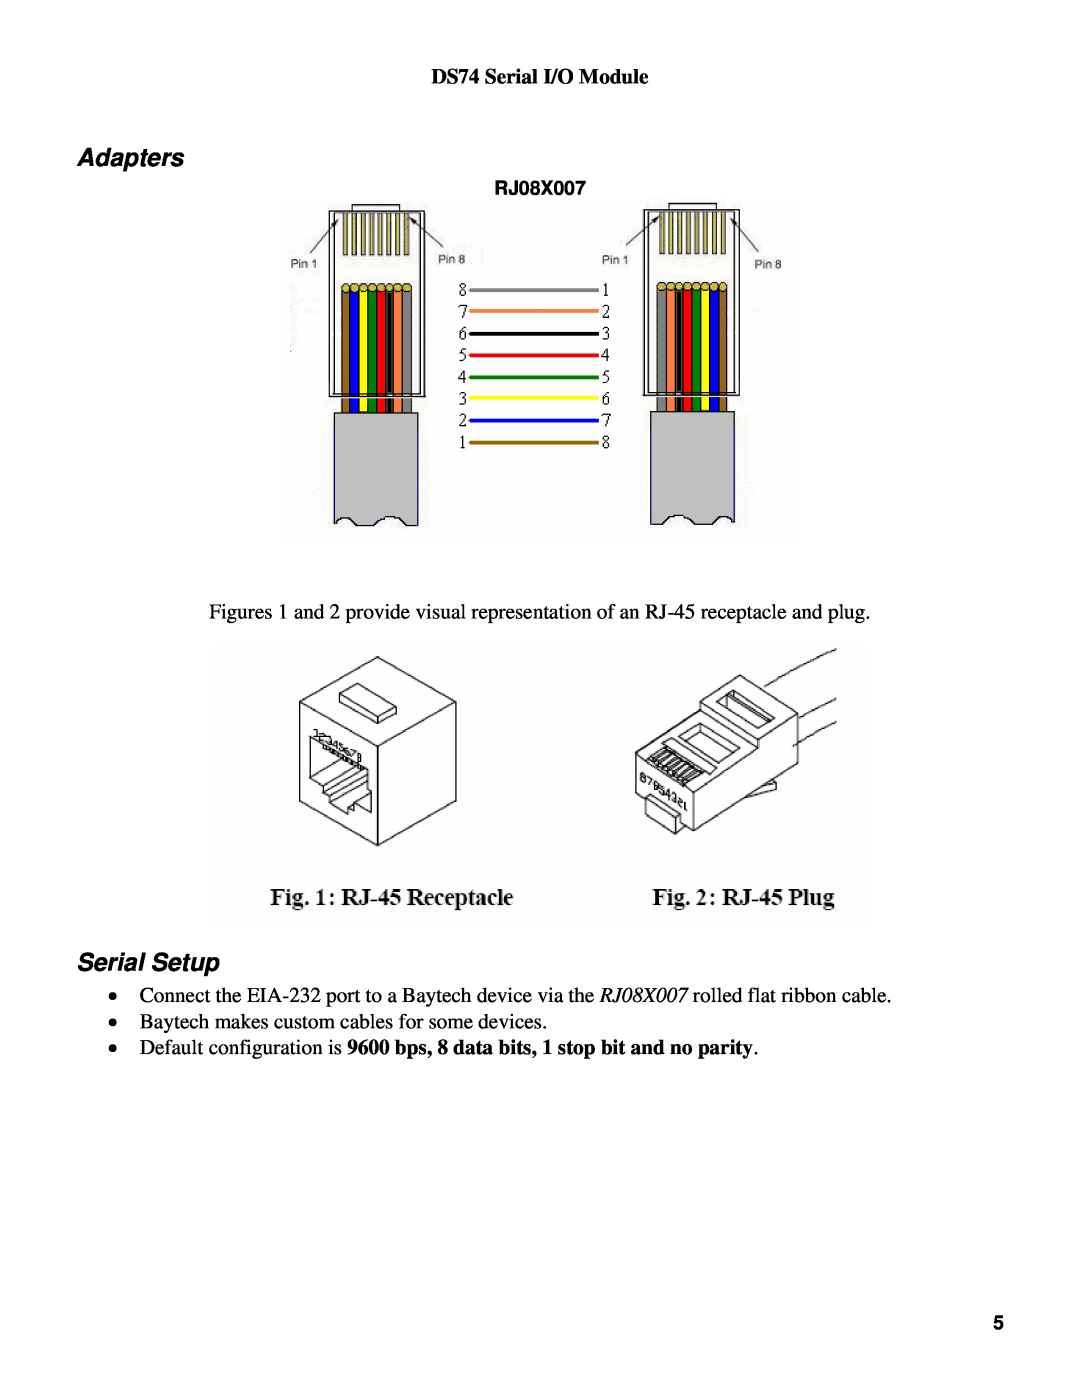 Bay Technical Associates manual Adapters, Serial Setup, DS74 Serial I/O Module 